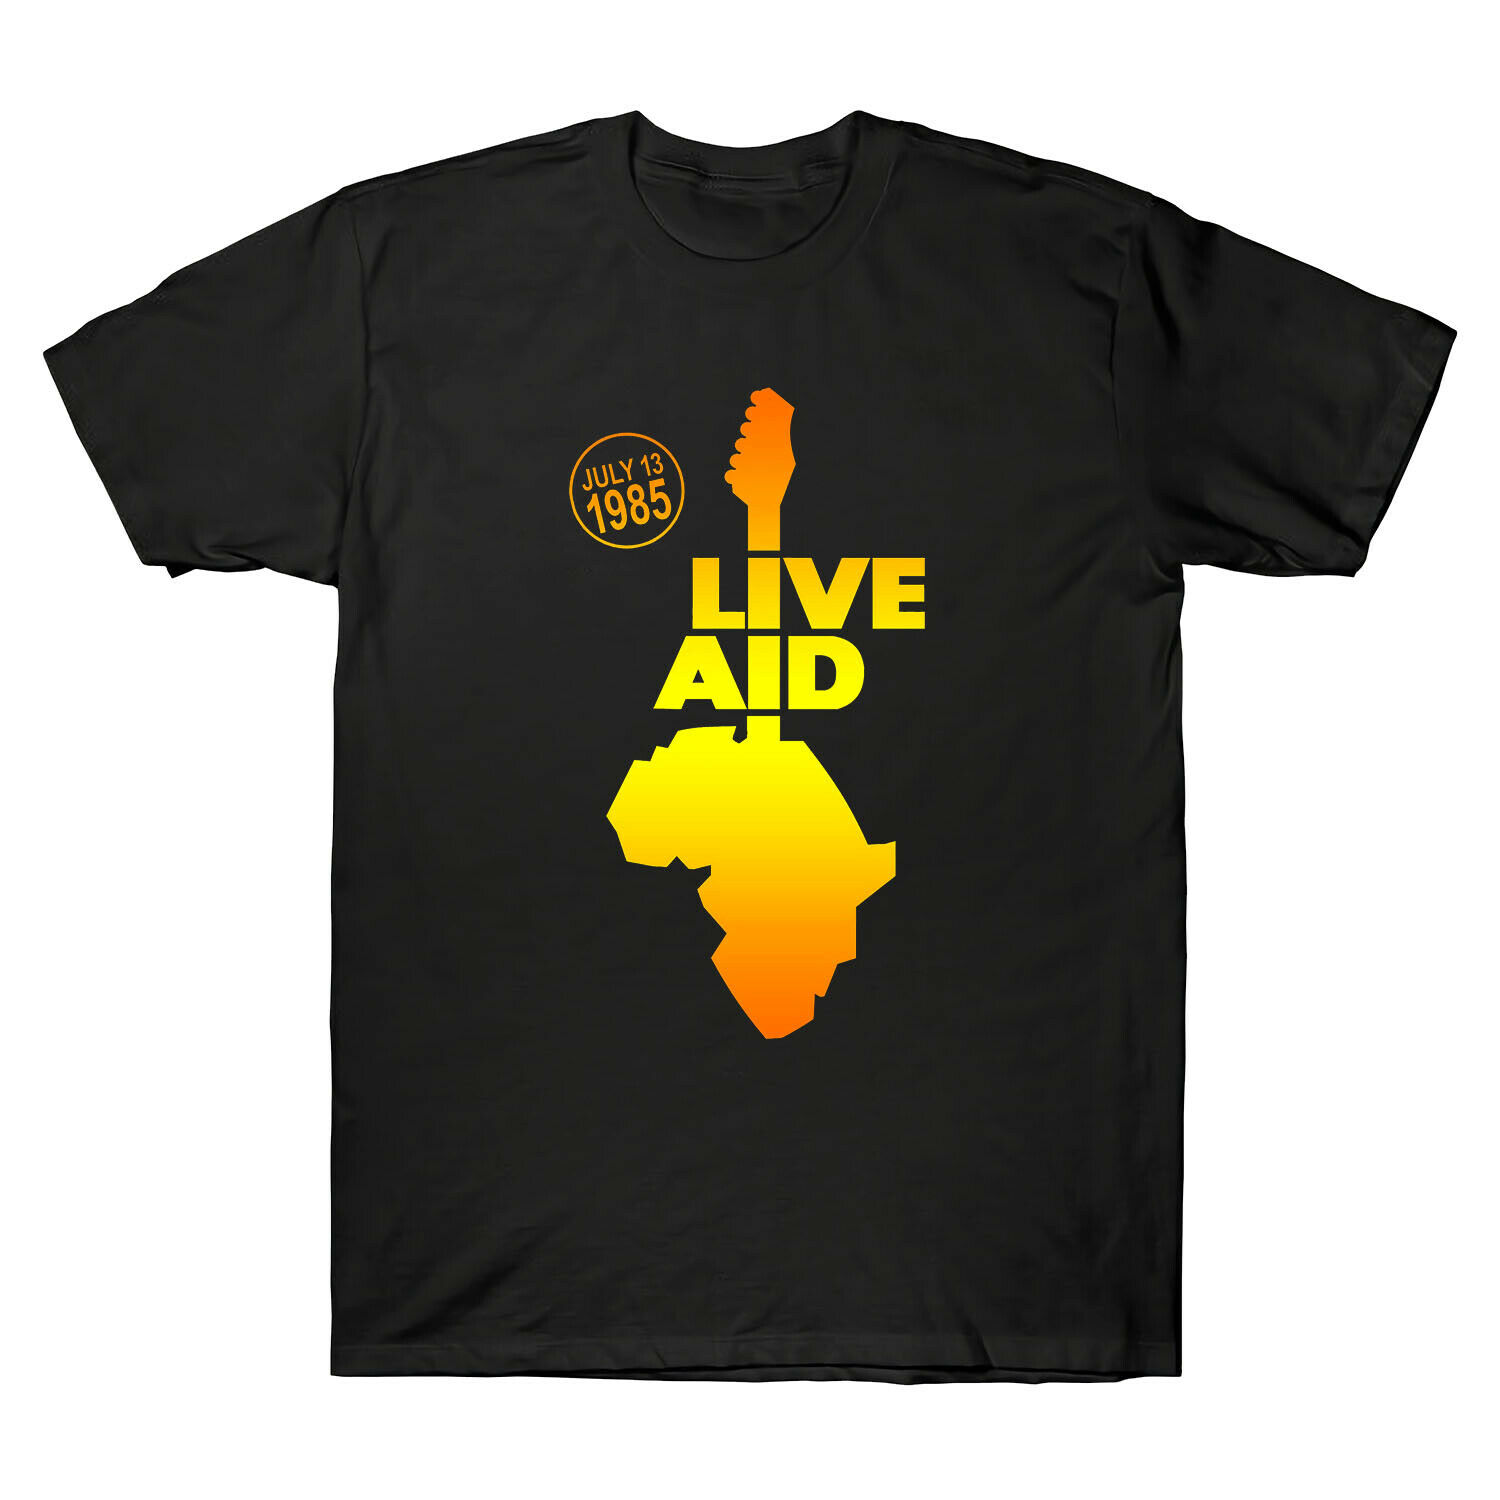 live aid 1985 shirt